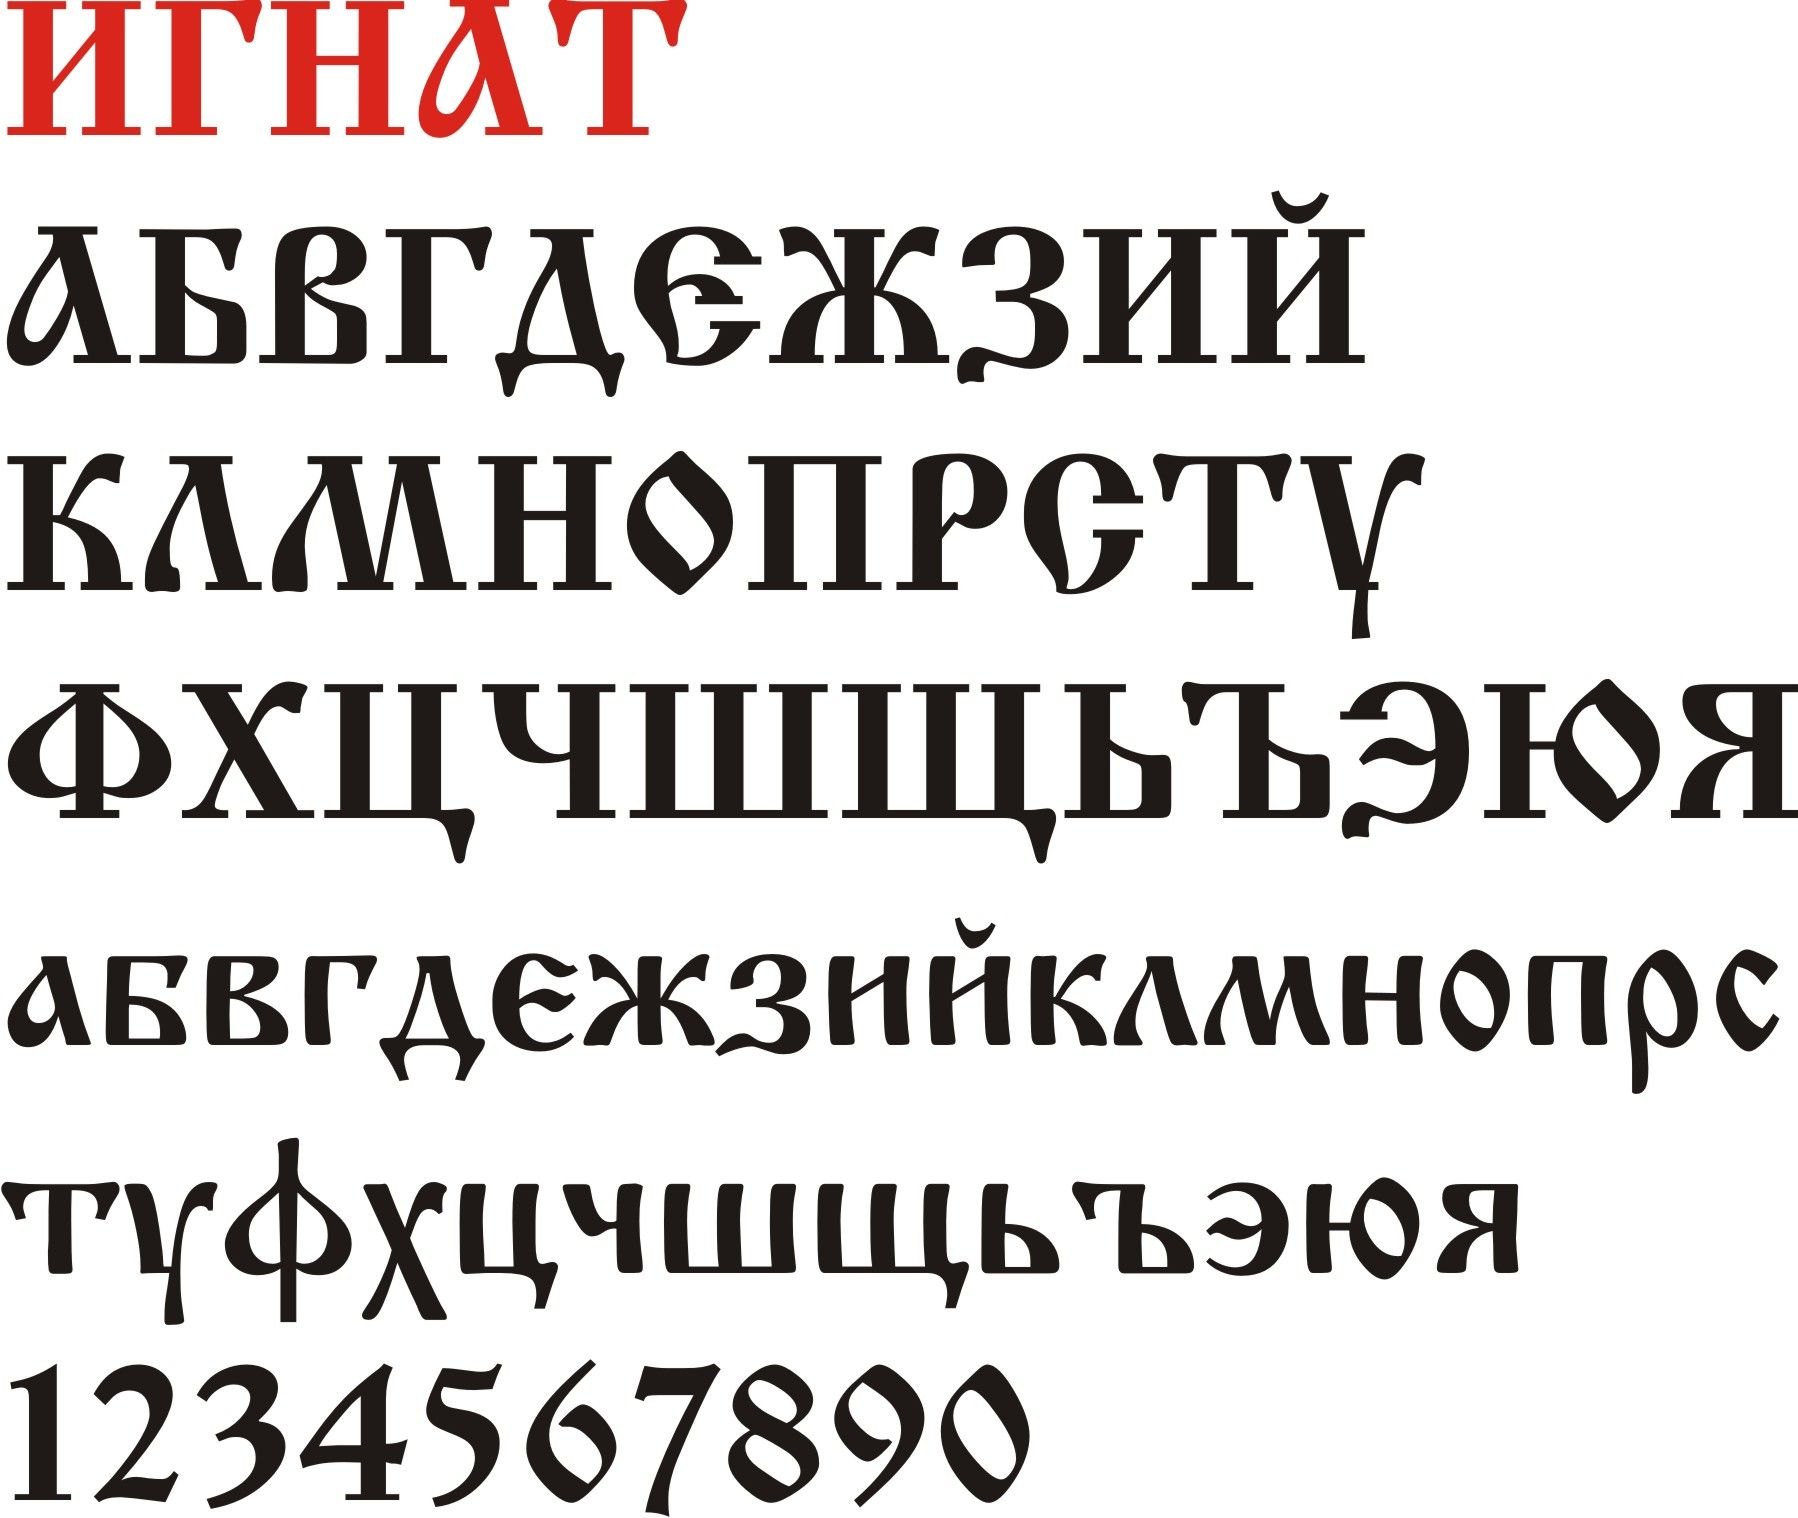 Шрифты русские как на телеграмме фото 26